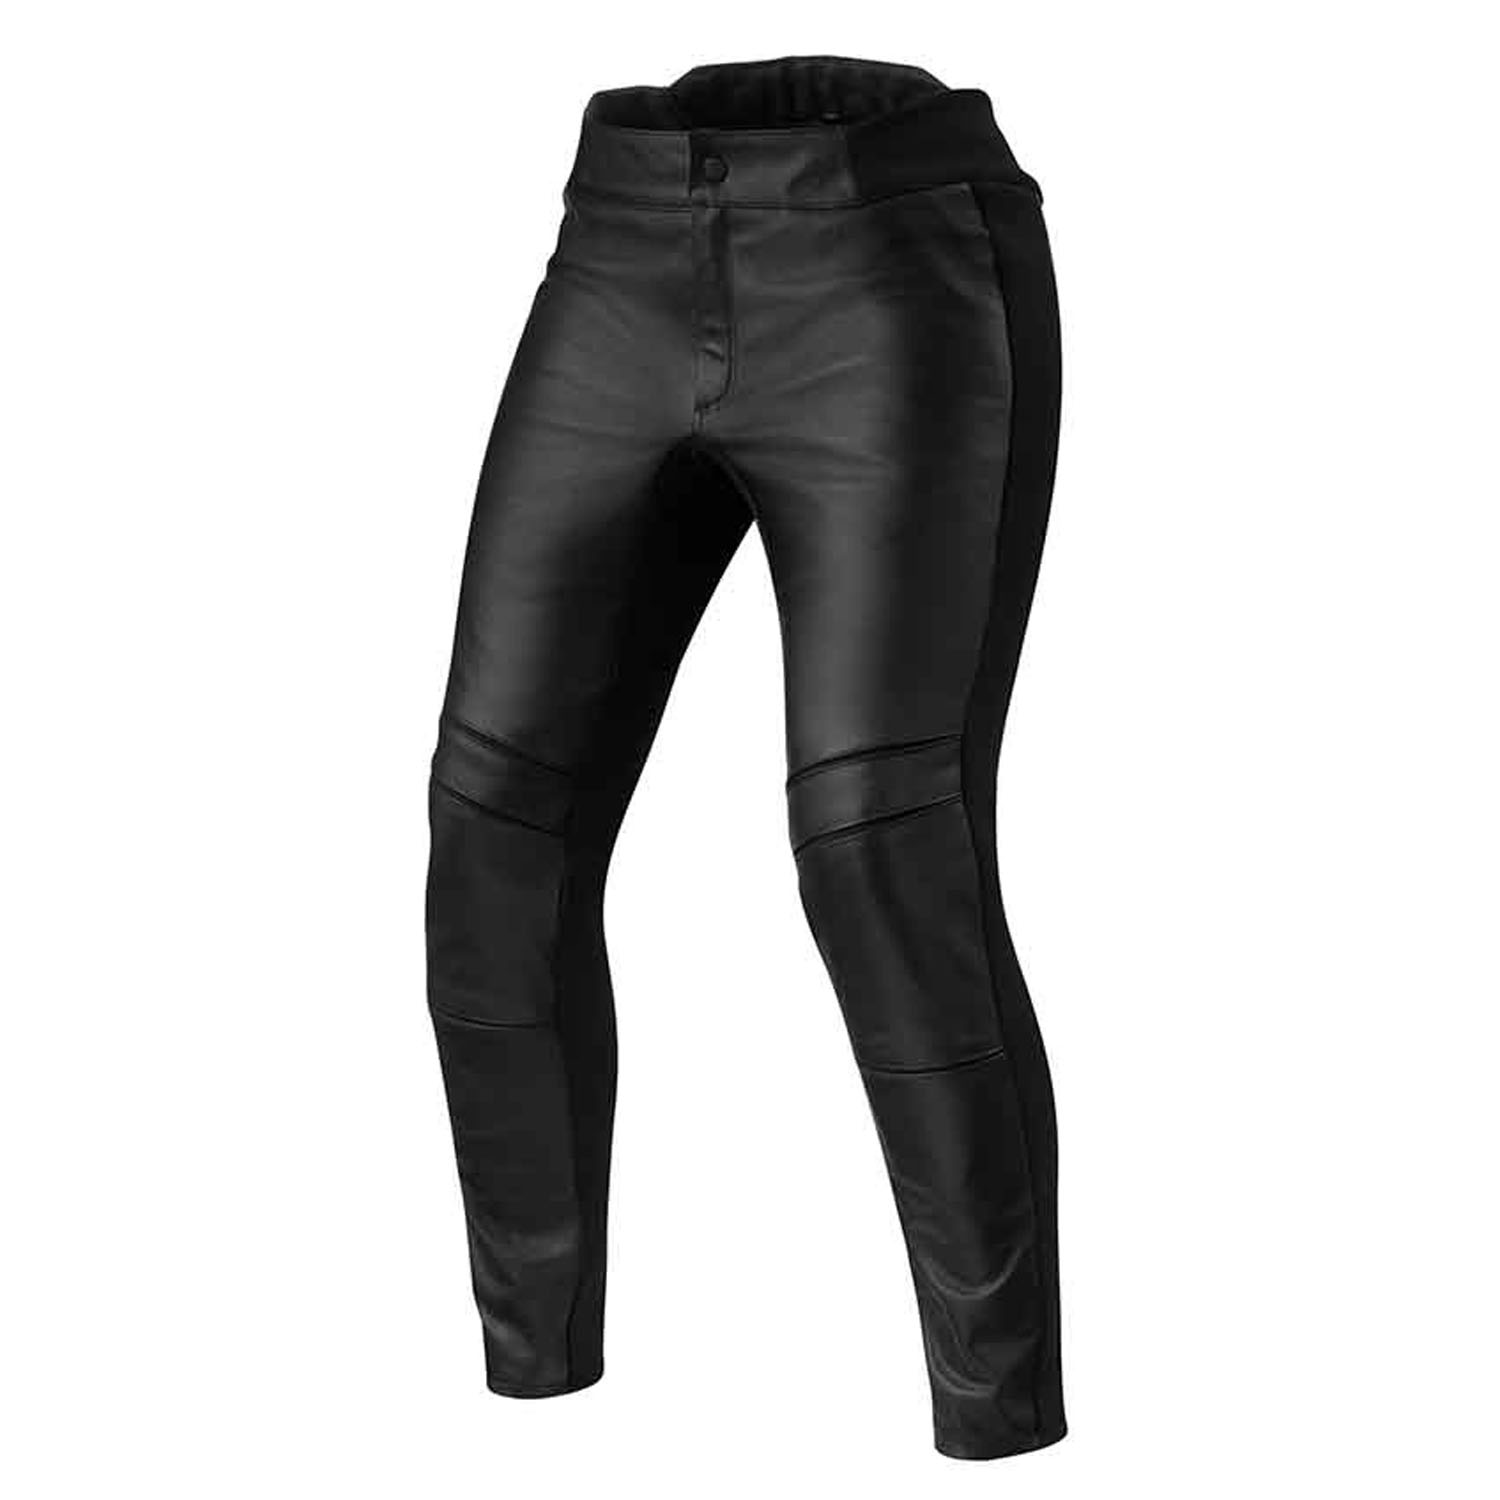 Image of REV'IT! Maci Ladies Black Short Motorcycle Pants Size 42 ID 8700001359153